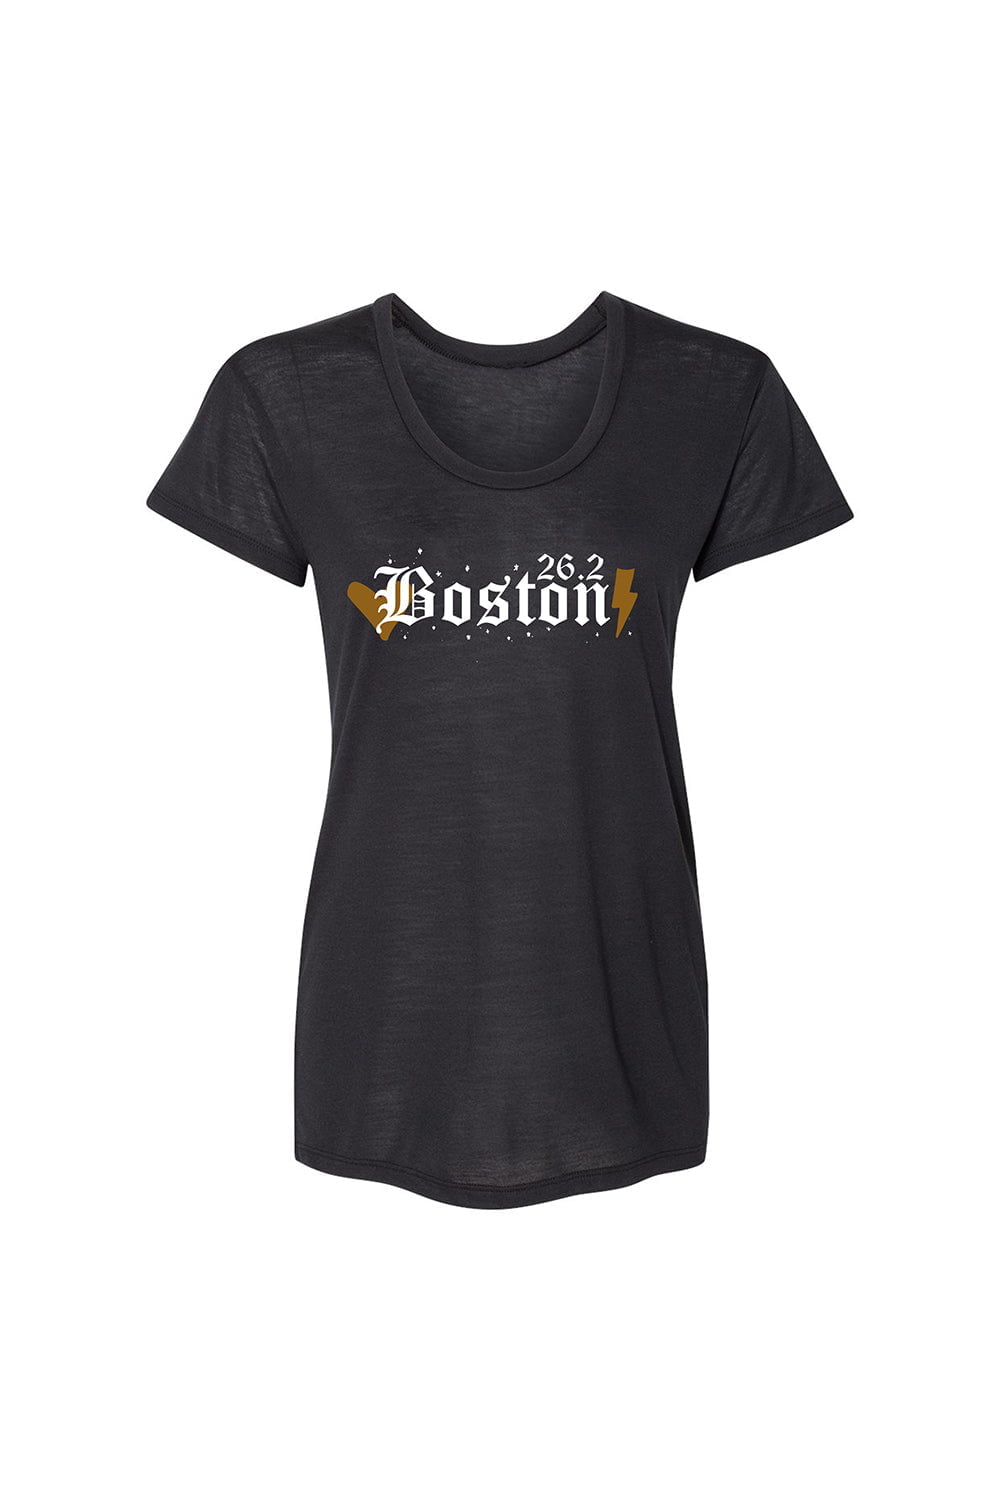 Sarah Marie Design Studio Women's Tee XSmall / Black Boston 26.2 Women's T-shirt